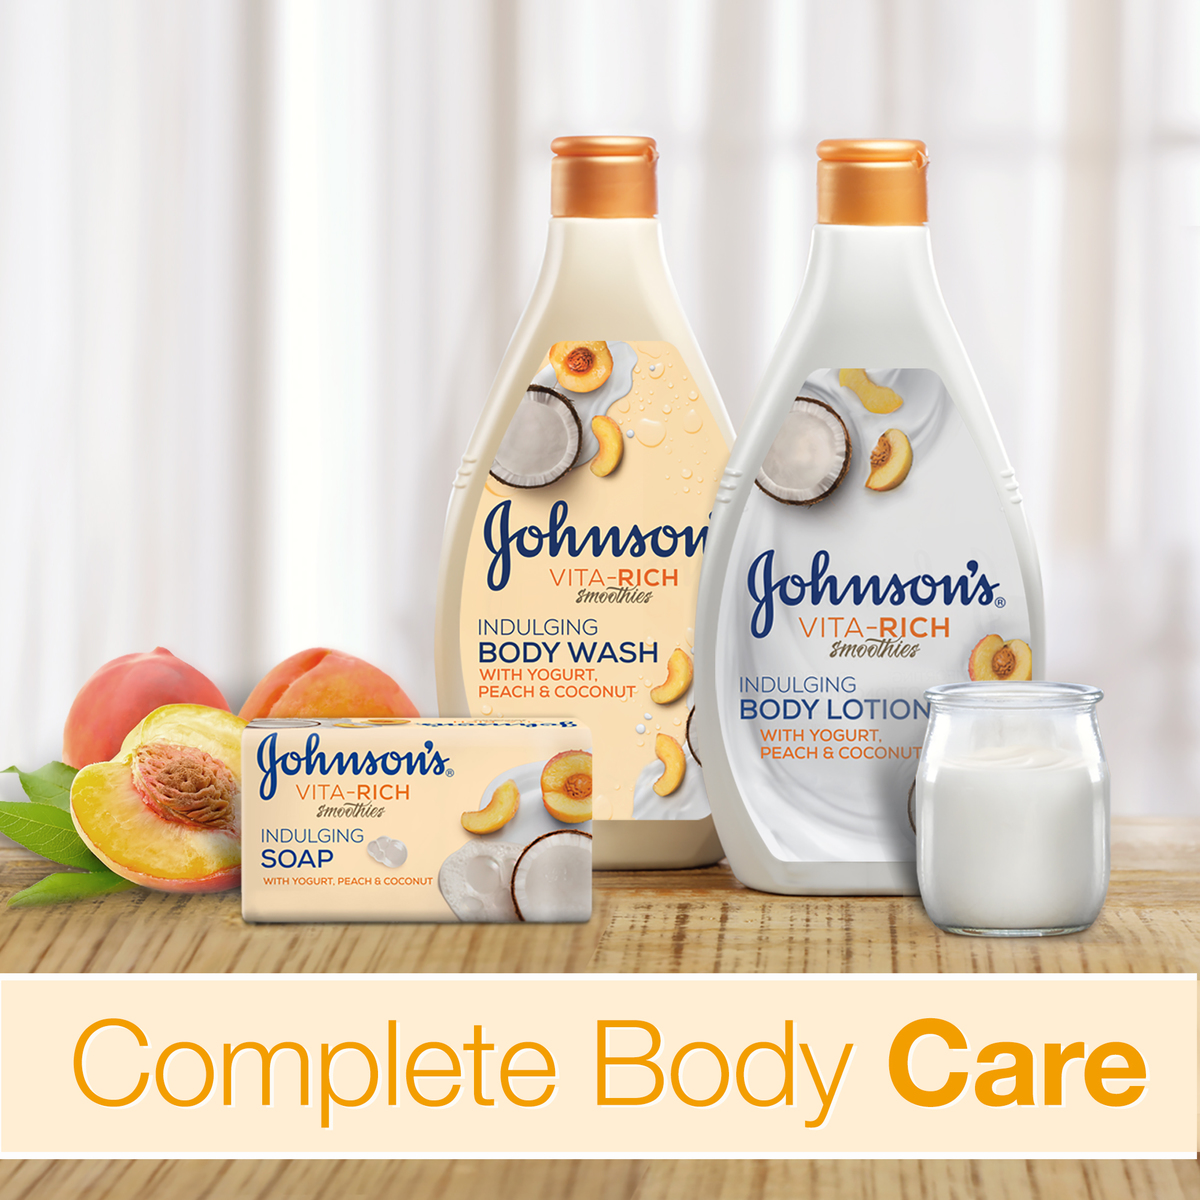 Johnson's Body Lotion Vita-Rich Smoothies Indulging 250 ml